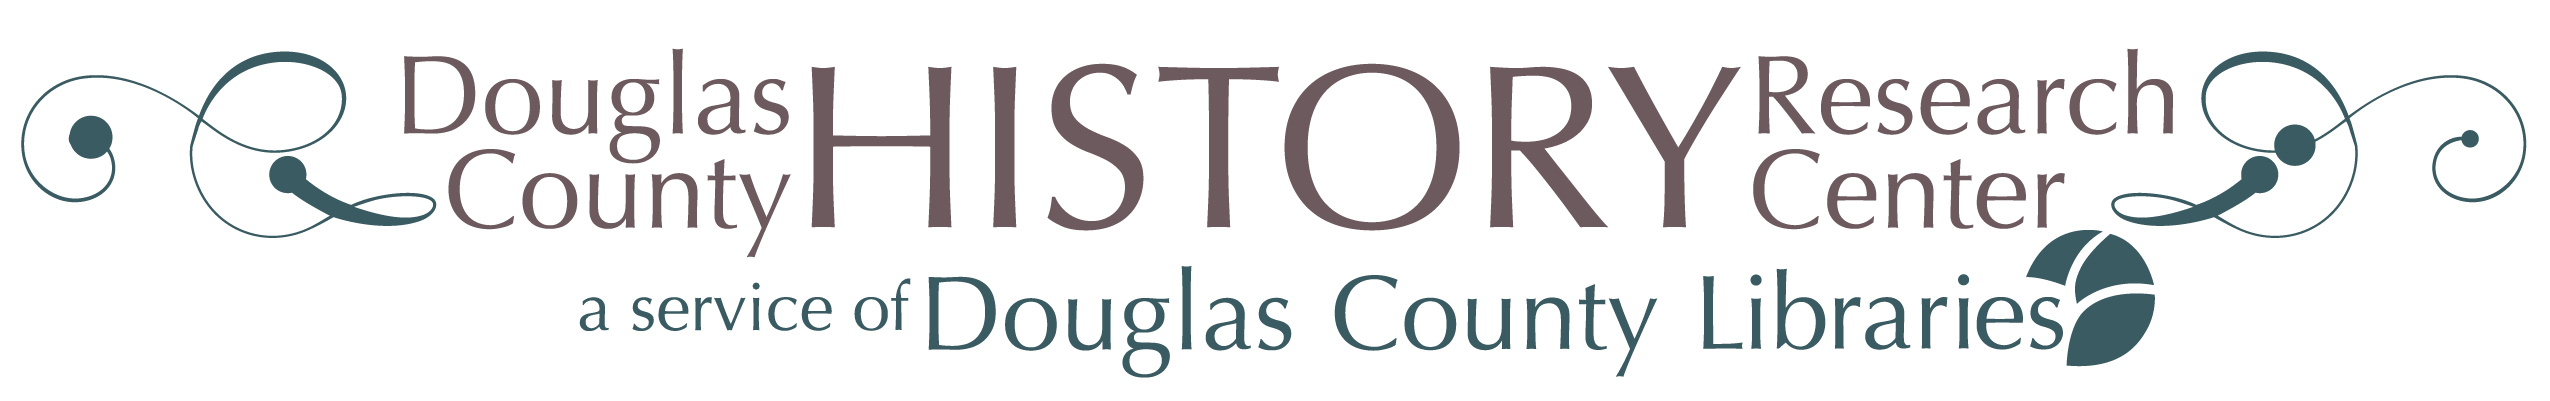 Logo du Douglas County History Research Center